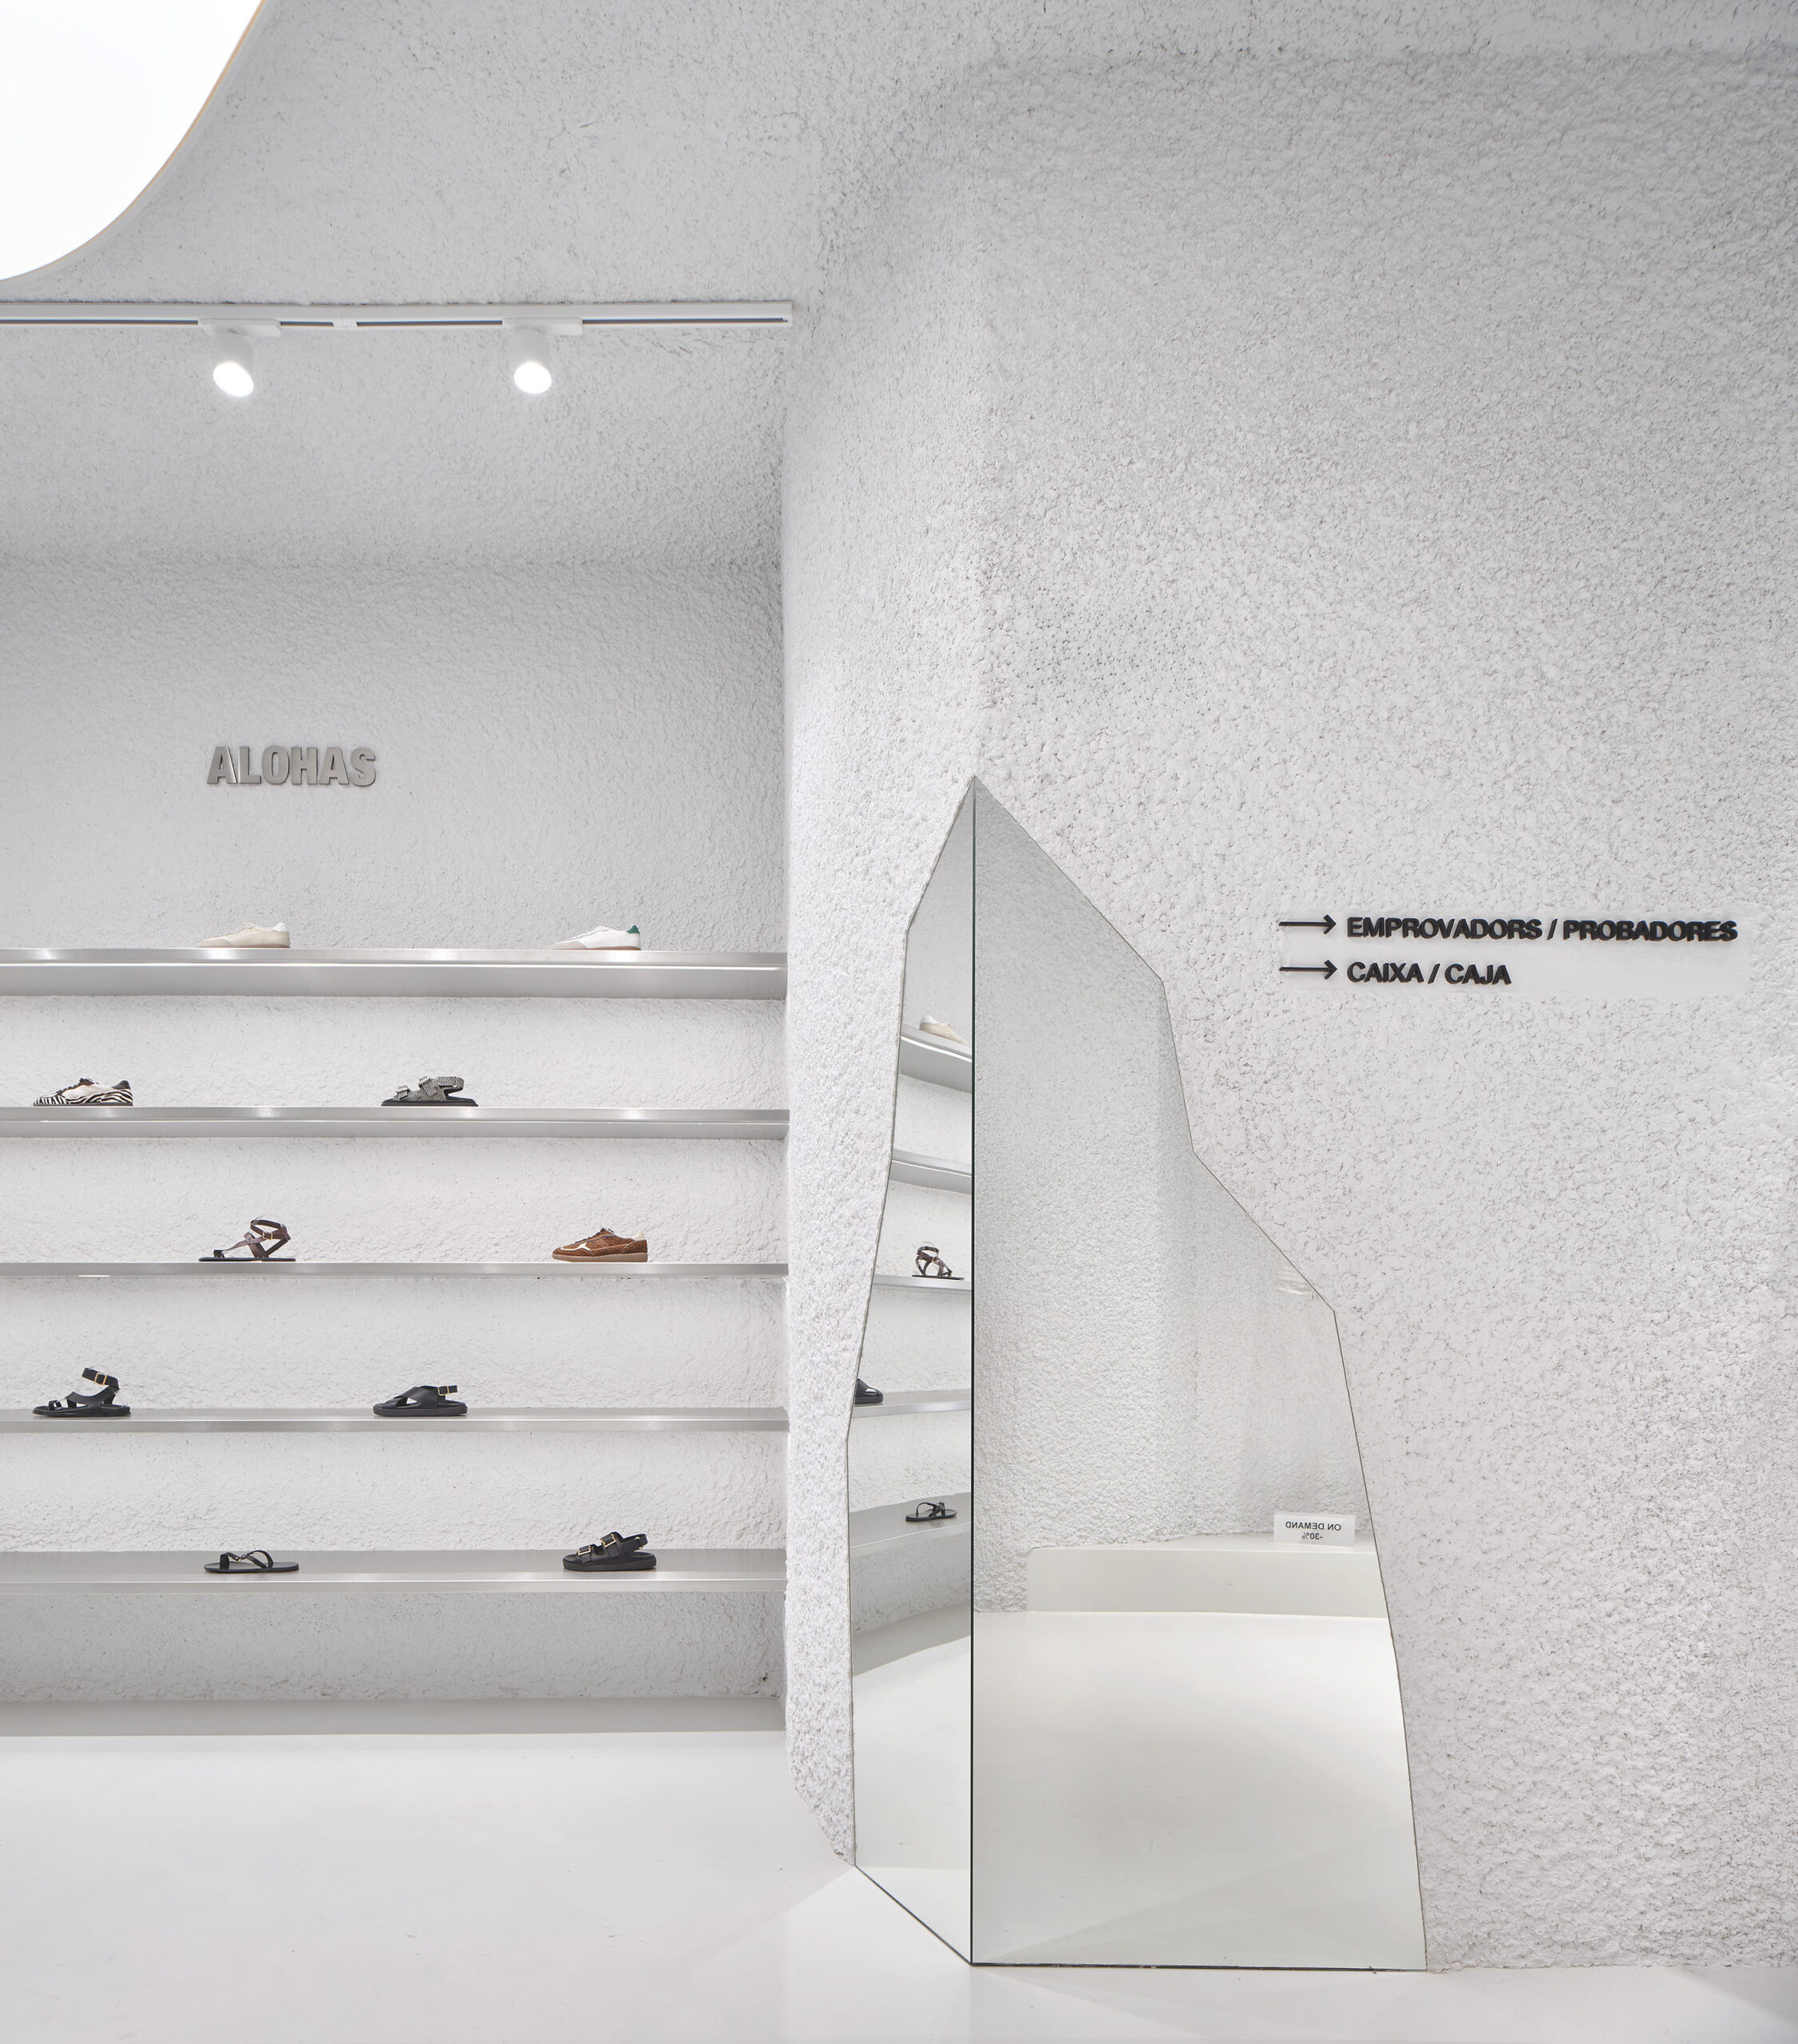 alohas_interior_retail_design_clap_studio